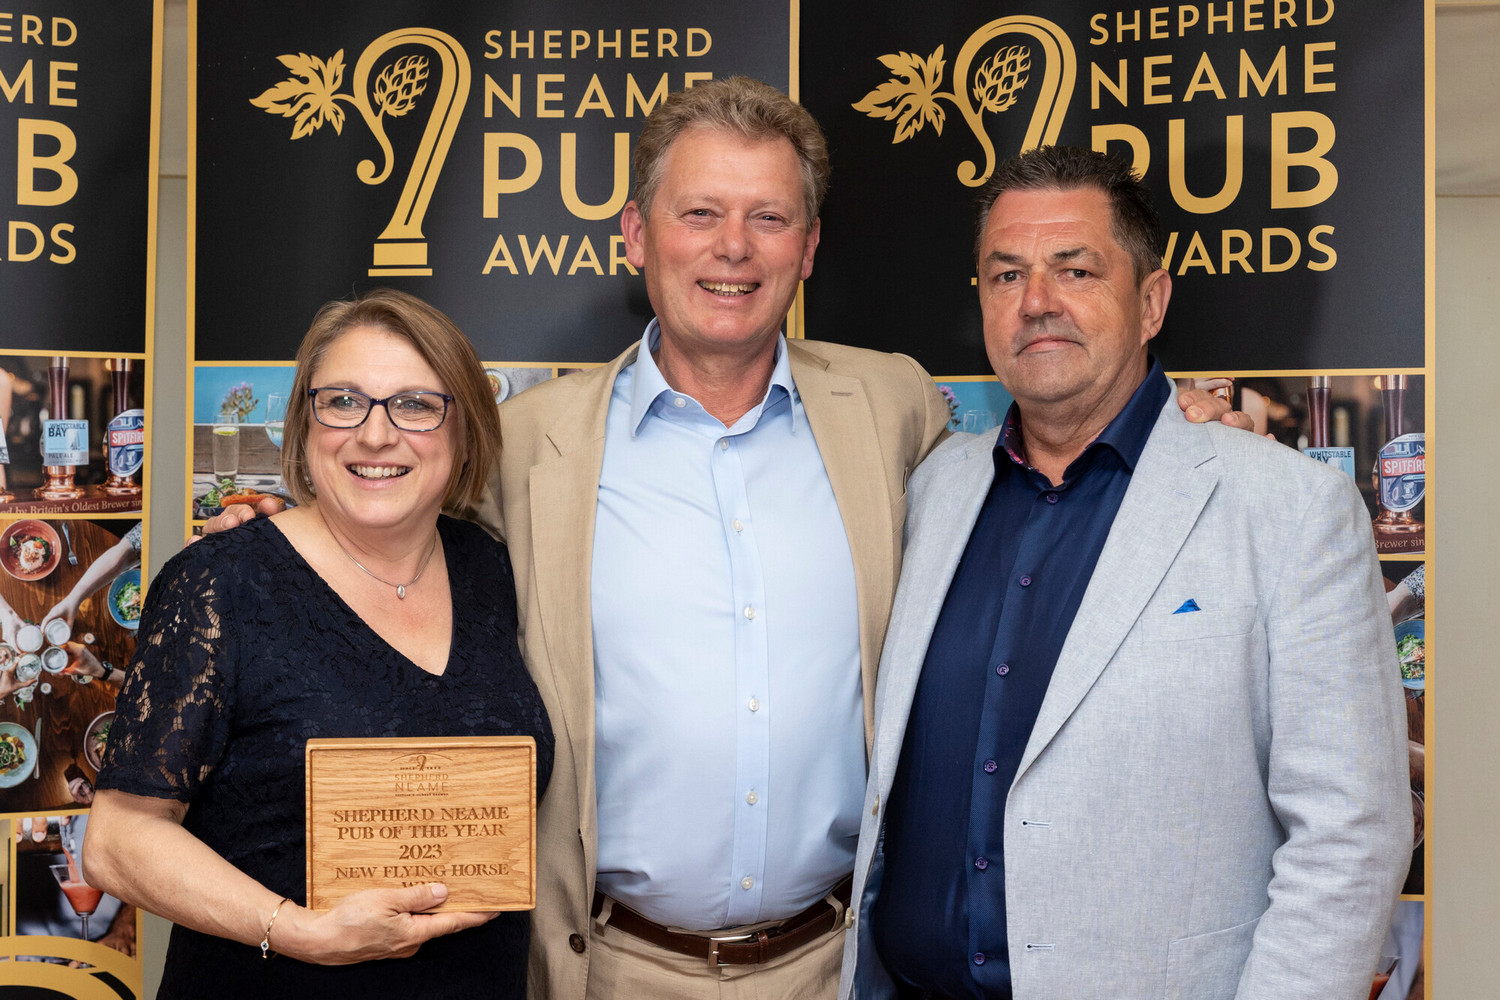 Shepherd Neame reveals pub awards winners